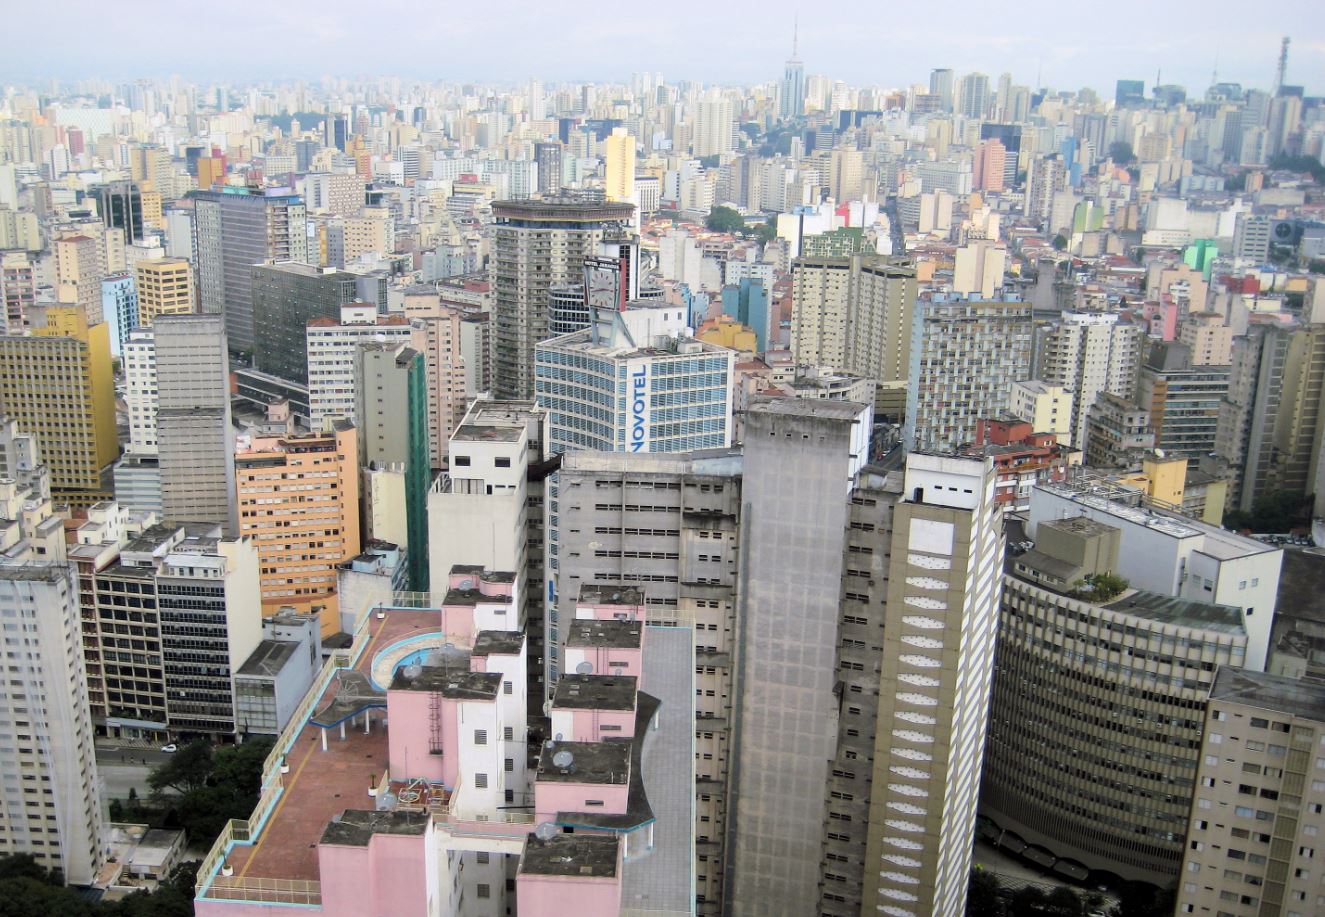 São Paulo presented the highest average price per square meter in the period (R$9,991/m²).